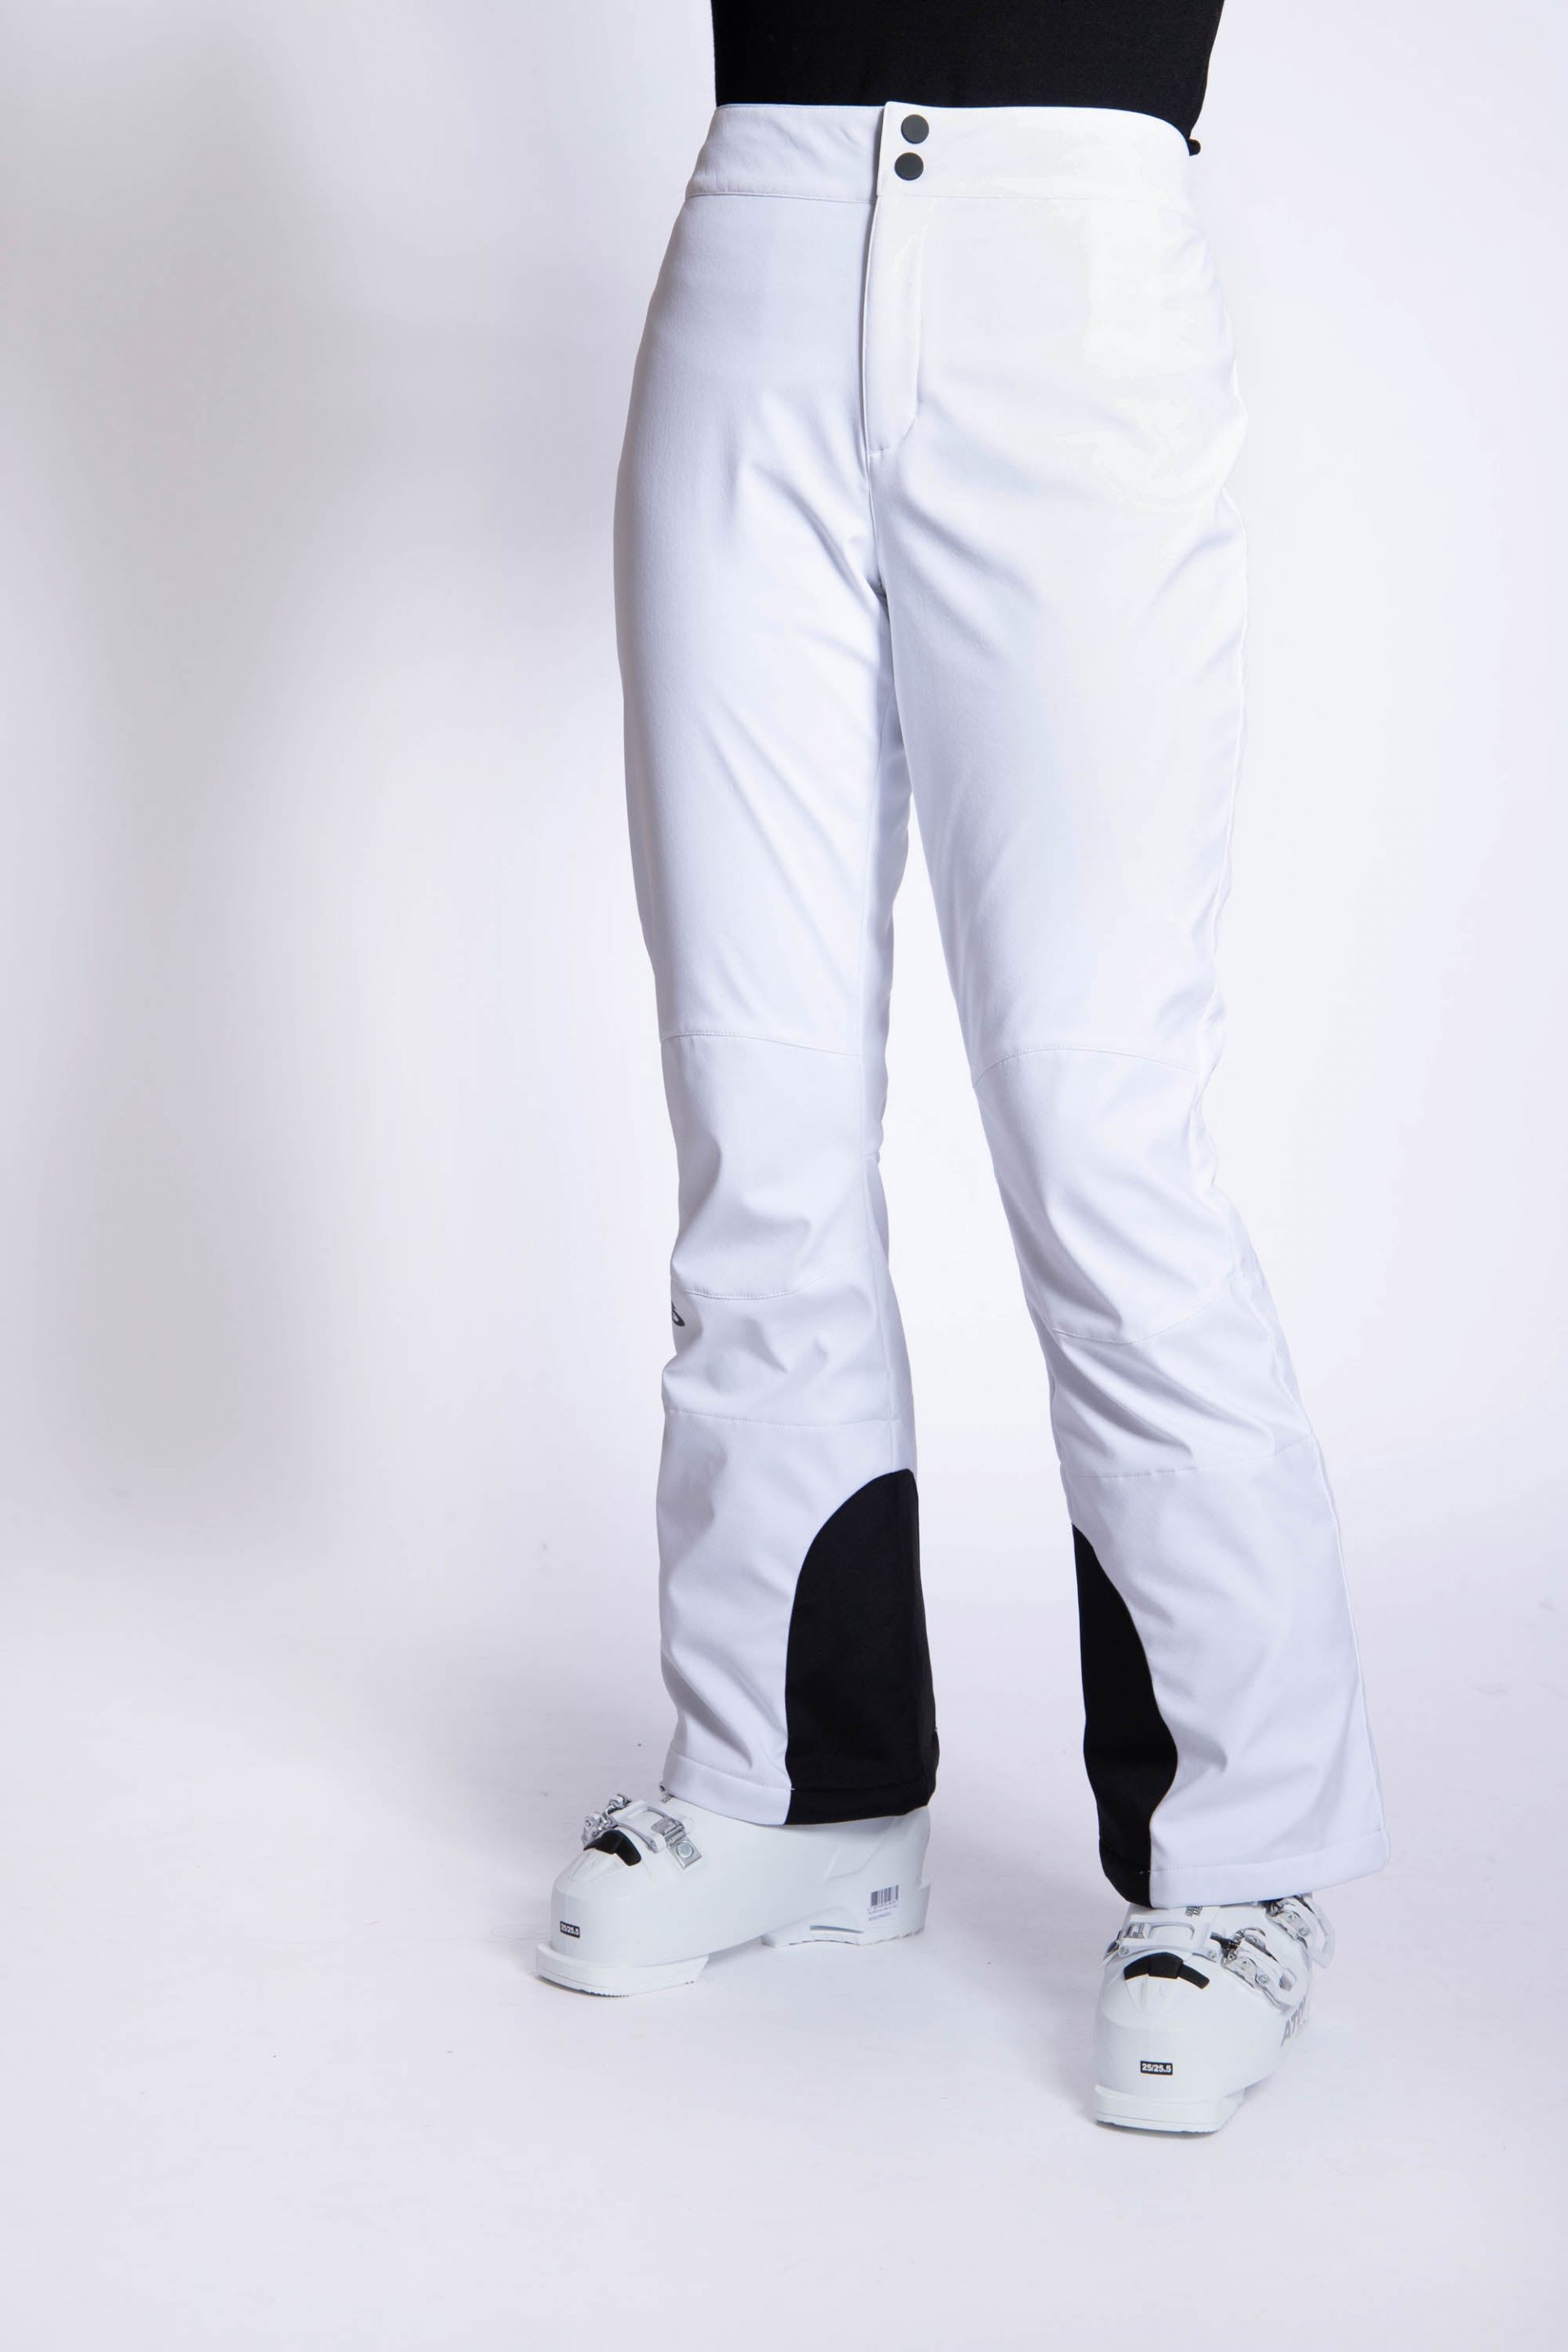 CMP - F.LLI Campagnalo Women's Ski Trousers White White Size:D36